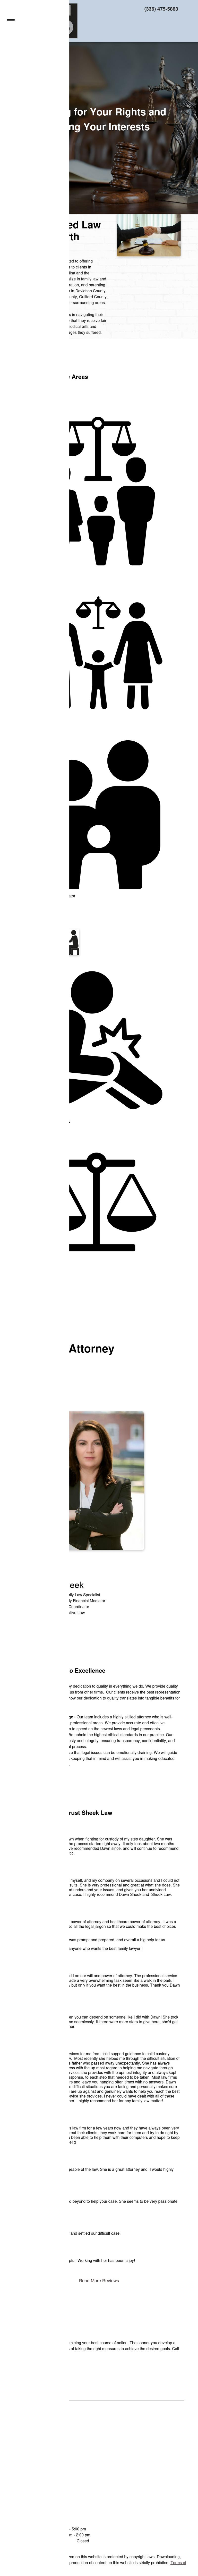 Sheek Law - Thomasville NC Lawyers